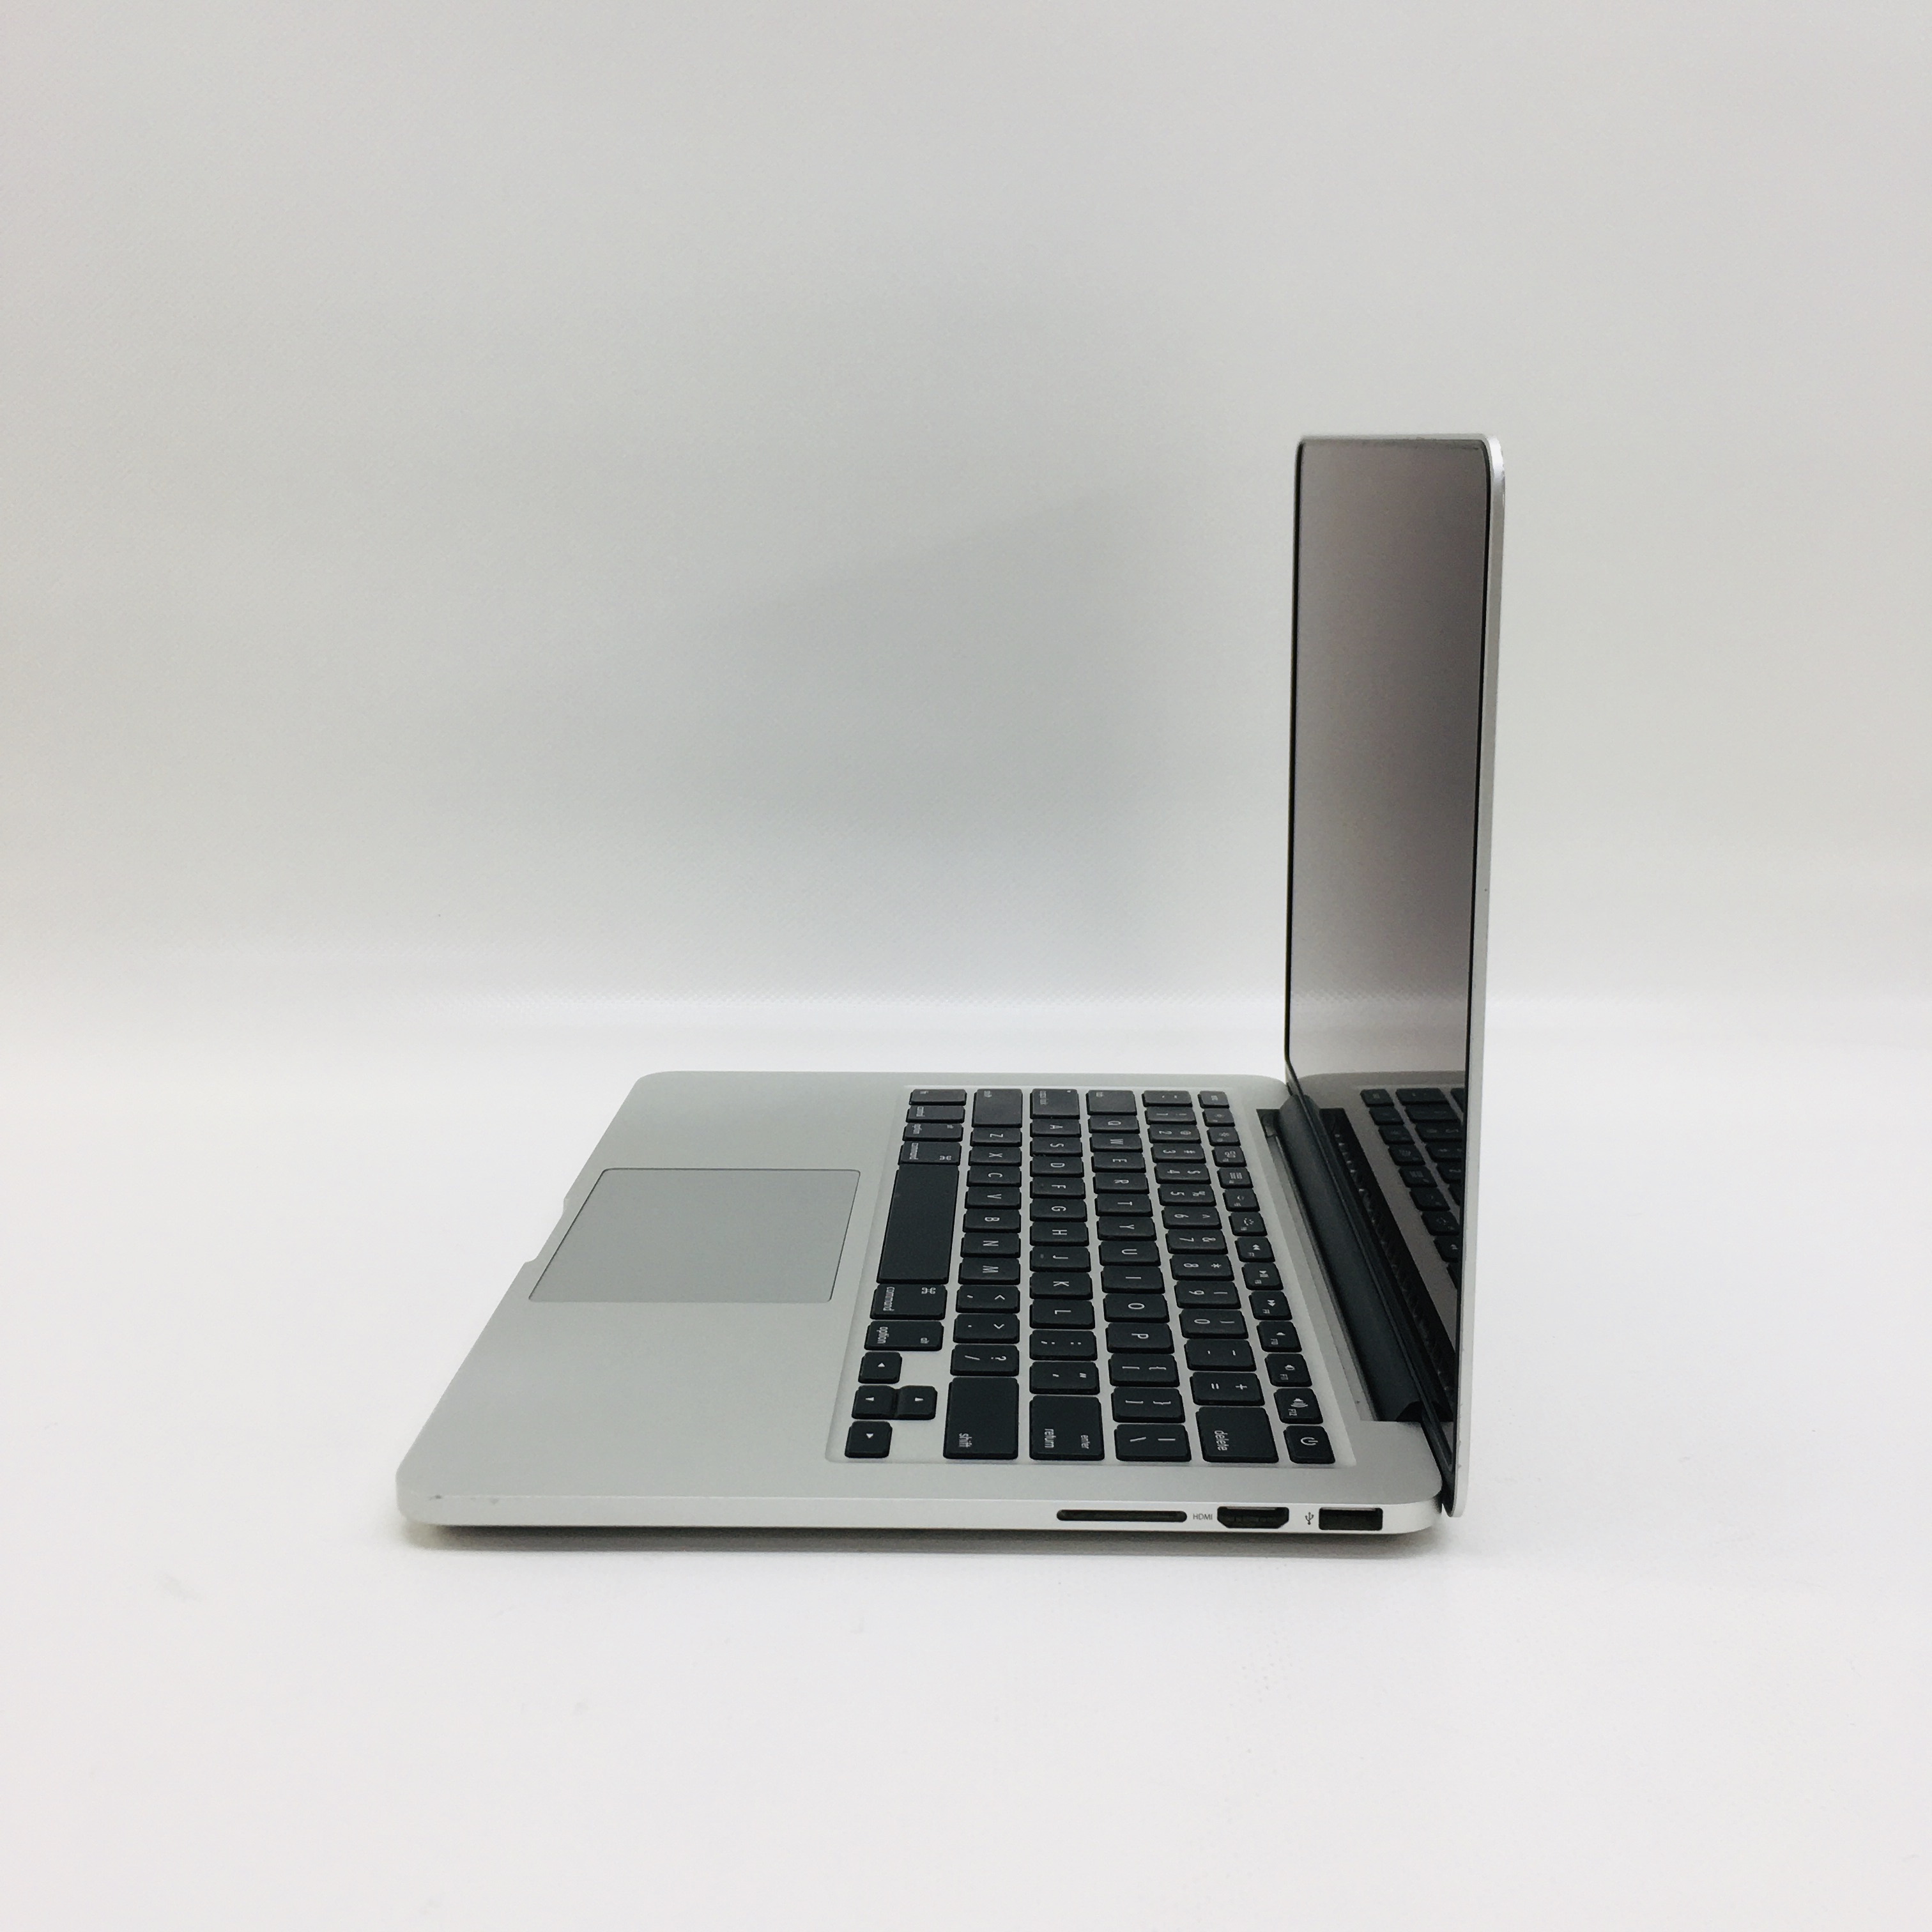 MacBook Pro Retina 13" Early 2013 (Intel Core i7 3.0 GHz 8 GB RAM 256 GB SSD), Intel Core i7 3.0 GHz, 8 GB RAM, 256 GB SSD, image 3